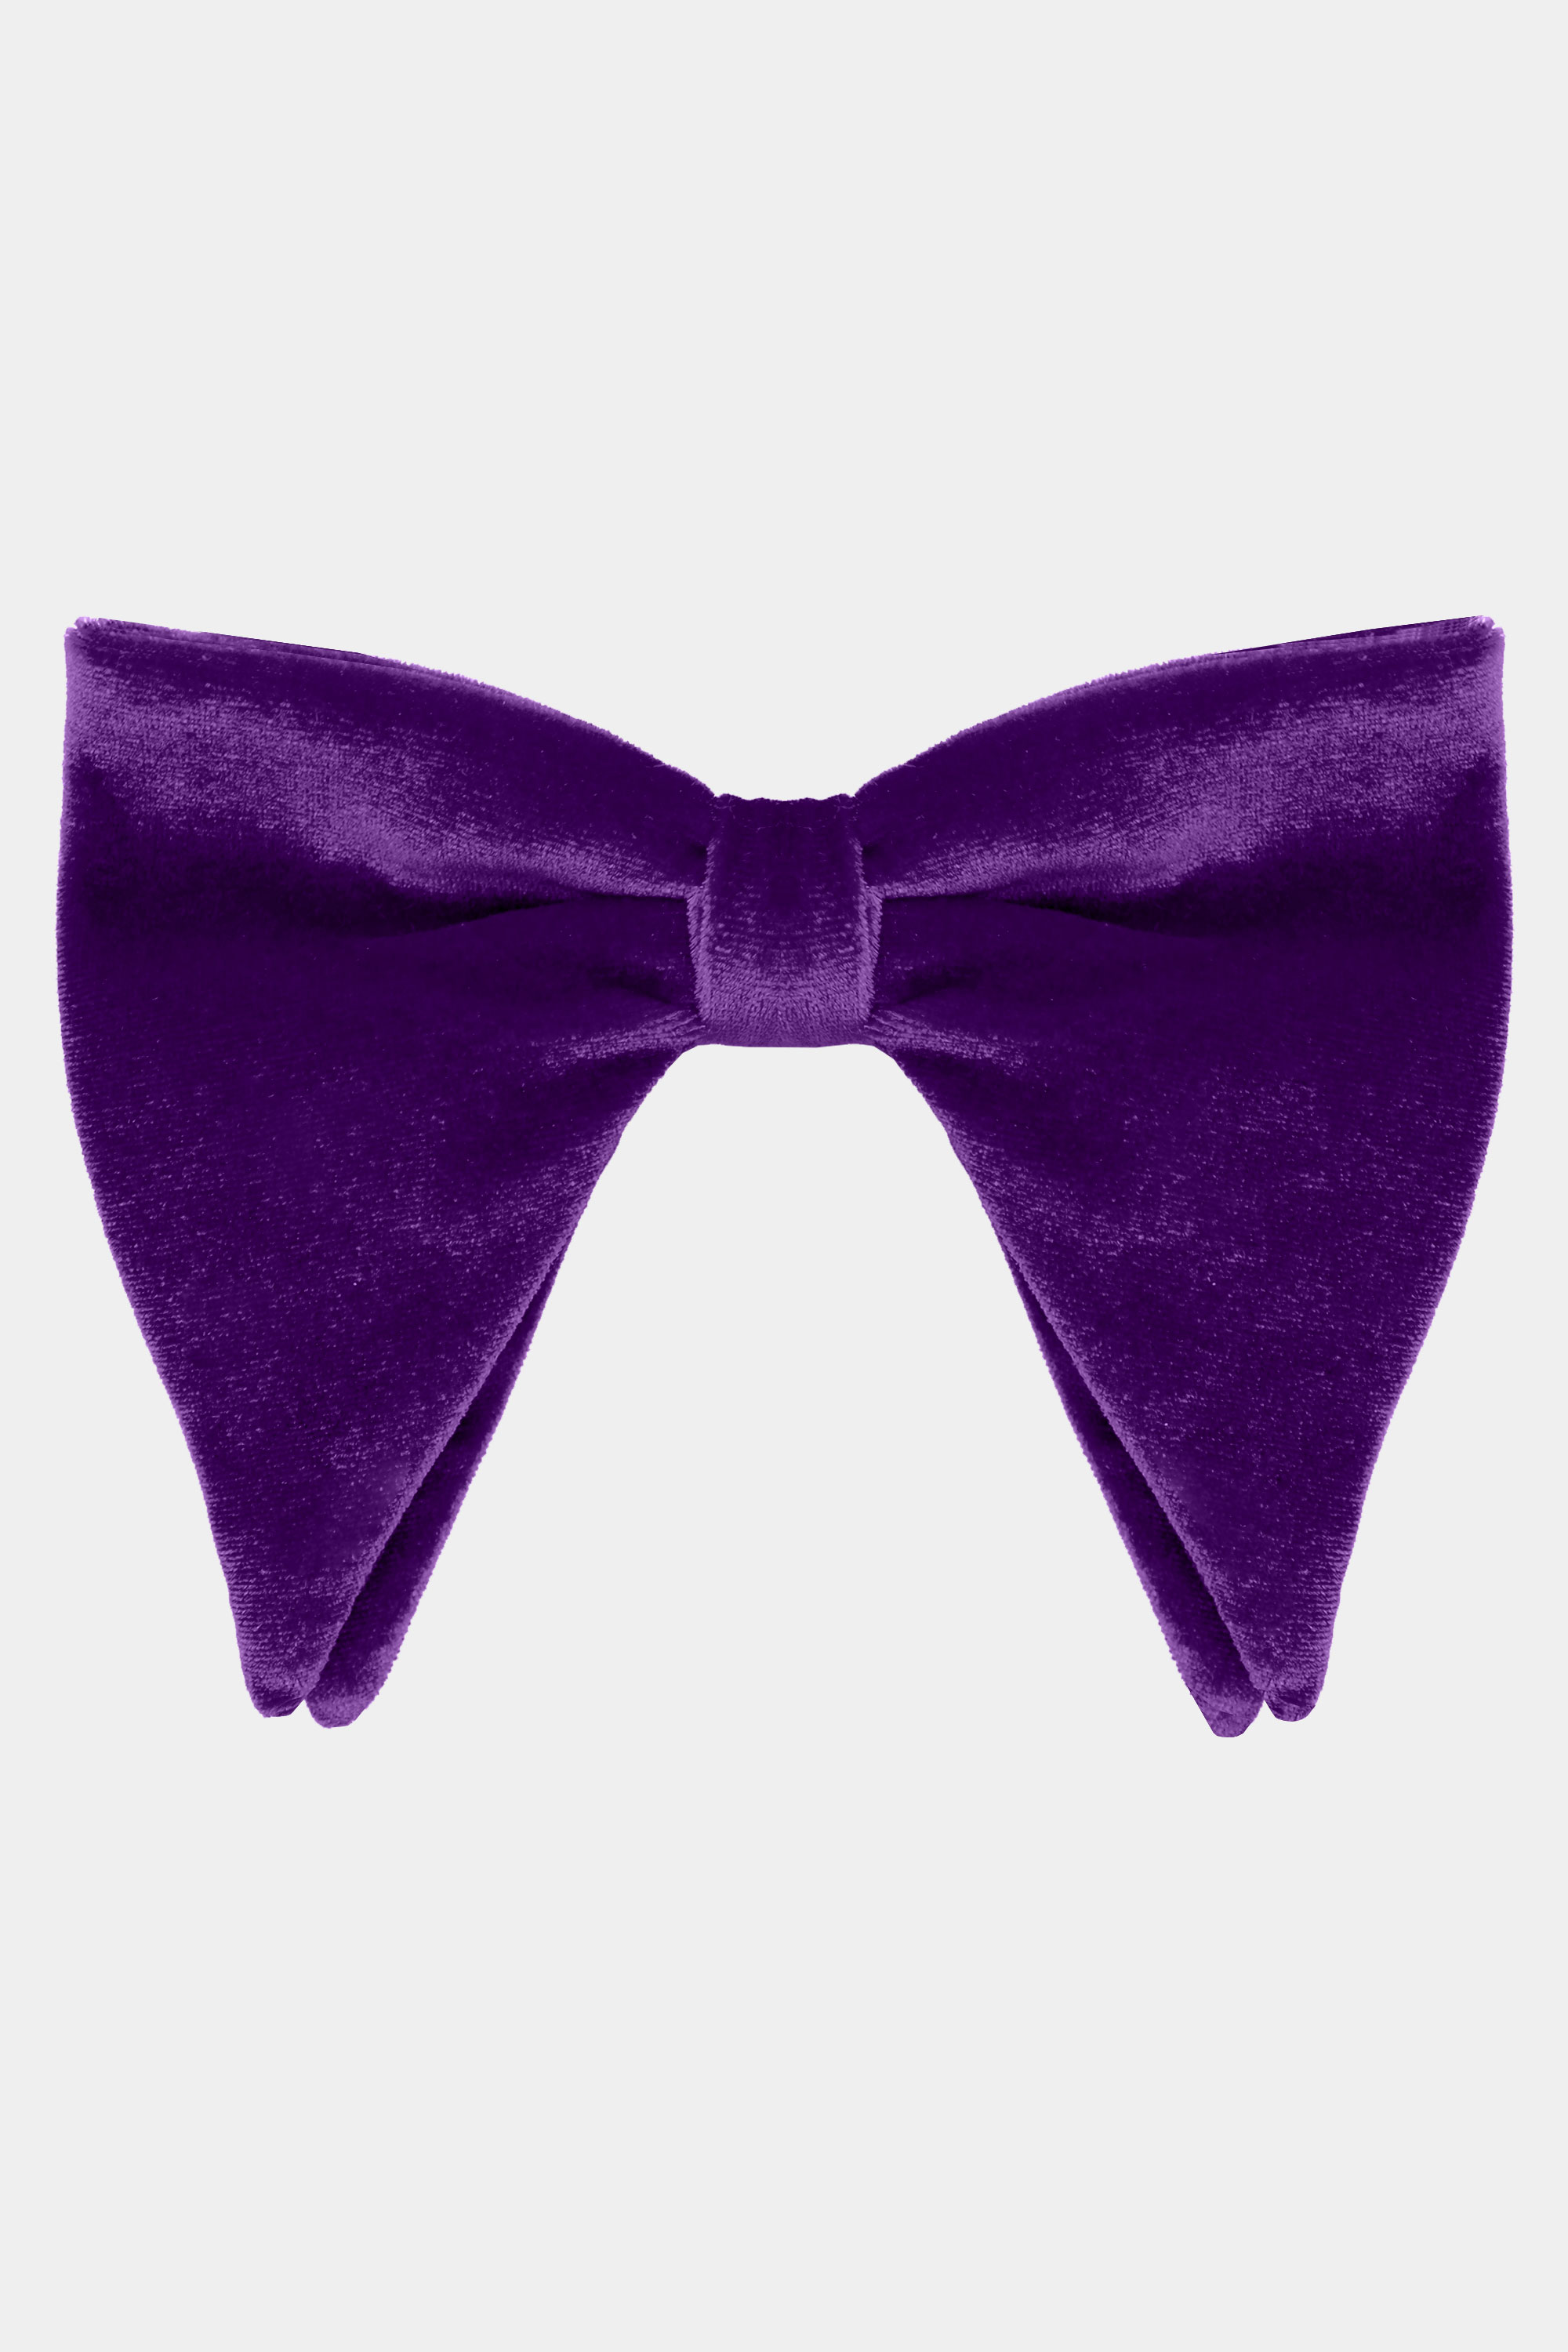 Oversized-Purple-Bow-Tie-Tuxedo-Butterfly-BowTie-from-Gentlemansguru.com